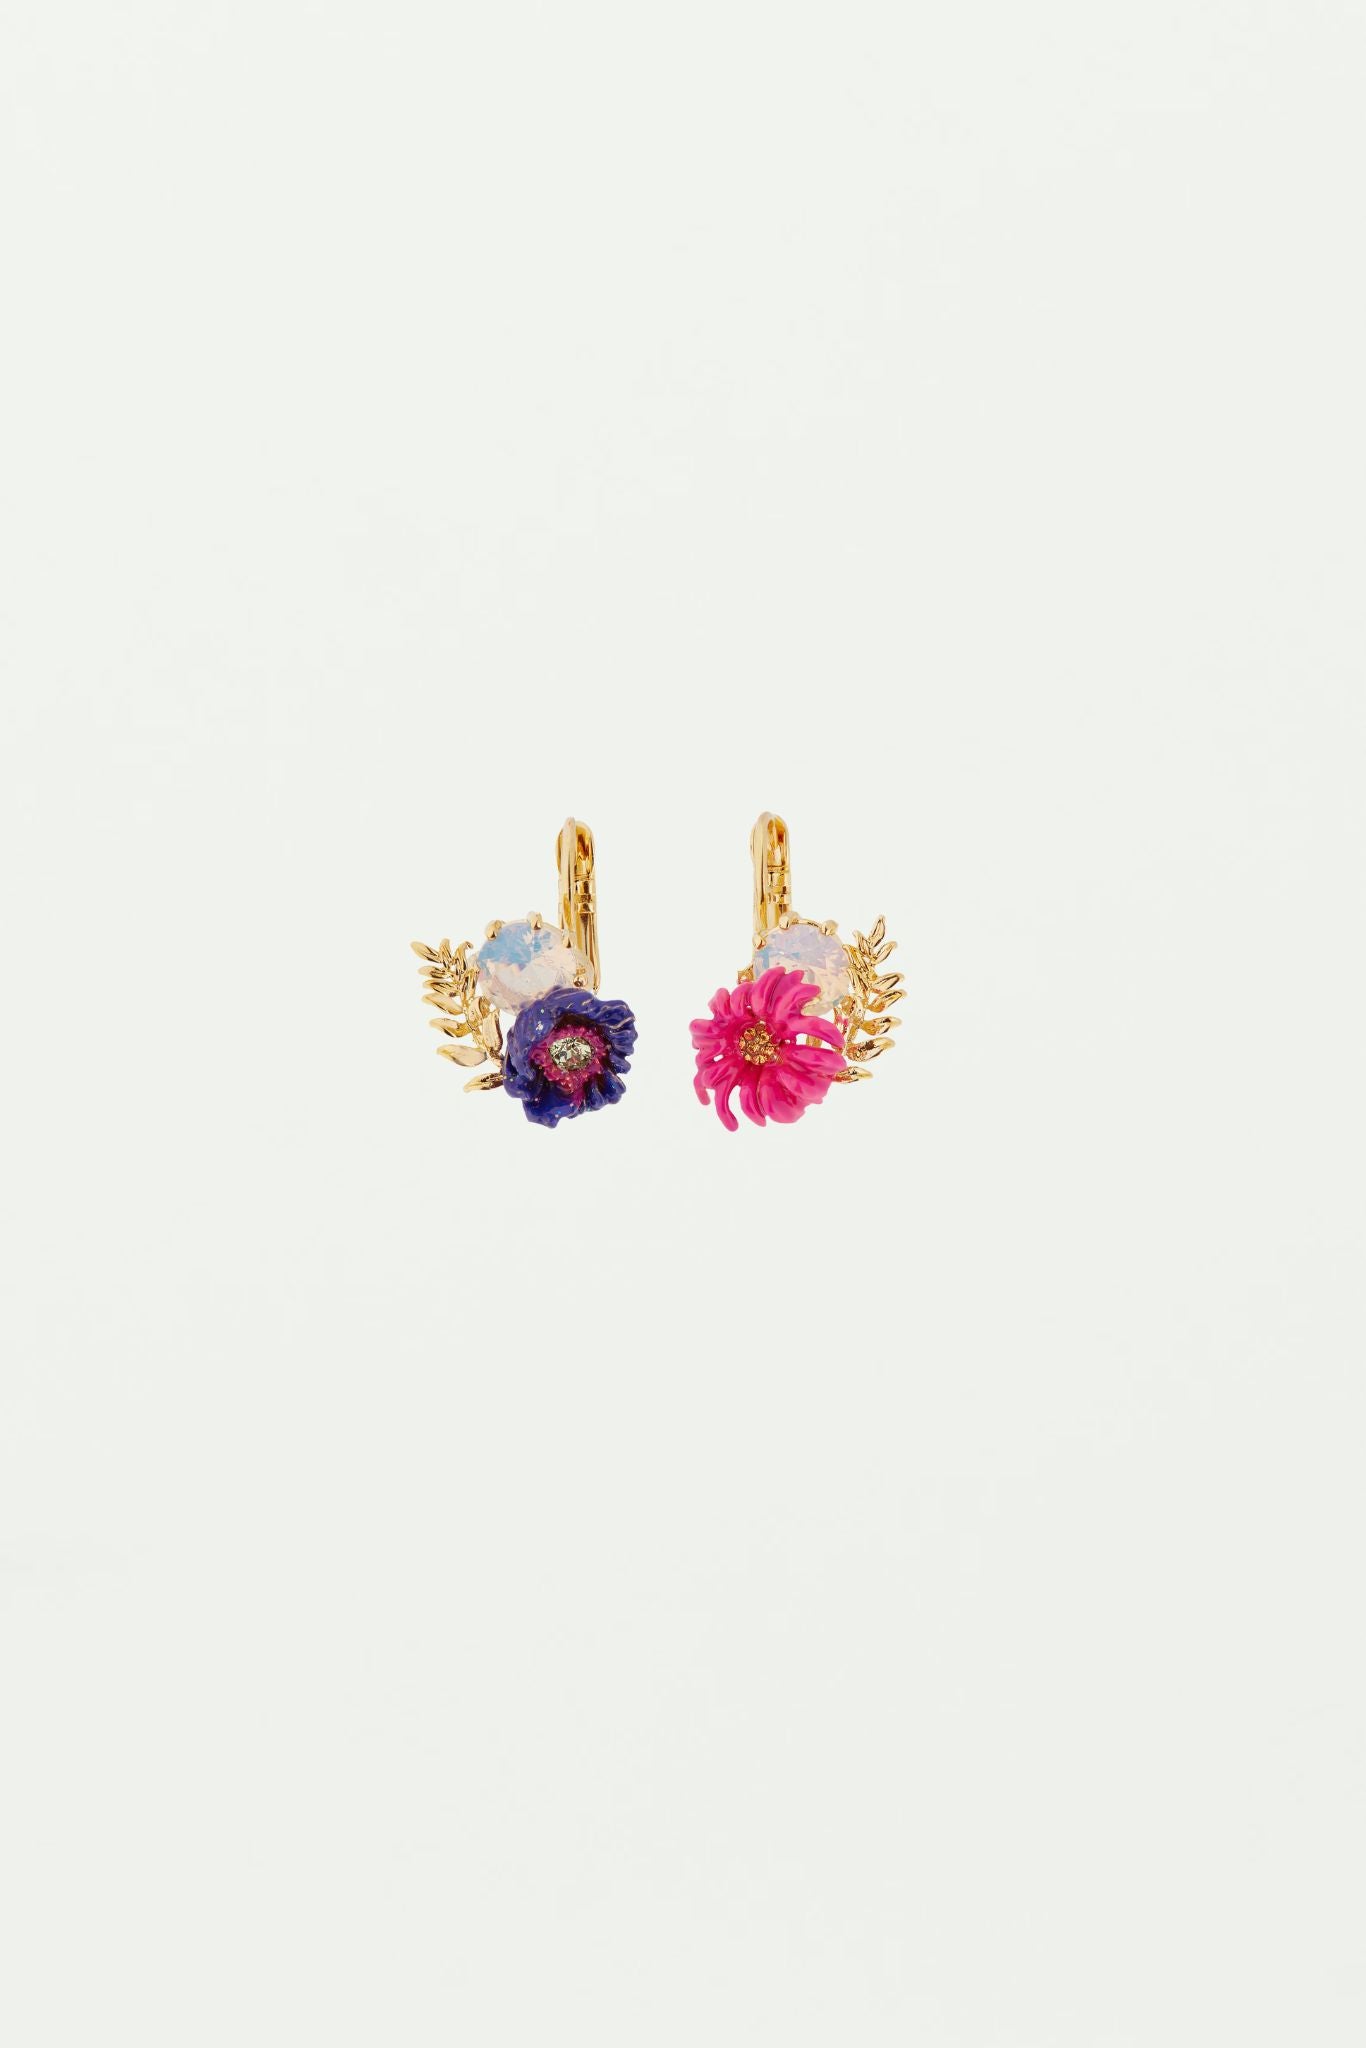 Imaginary flower and crystal sleeper earrings